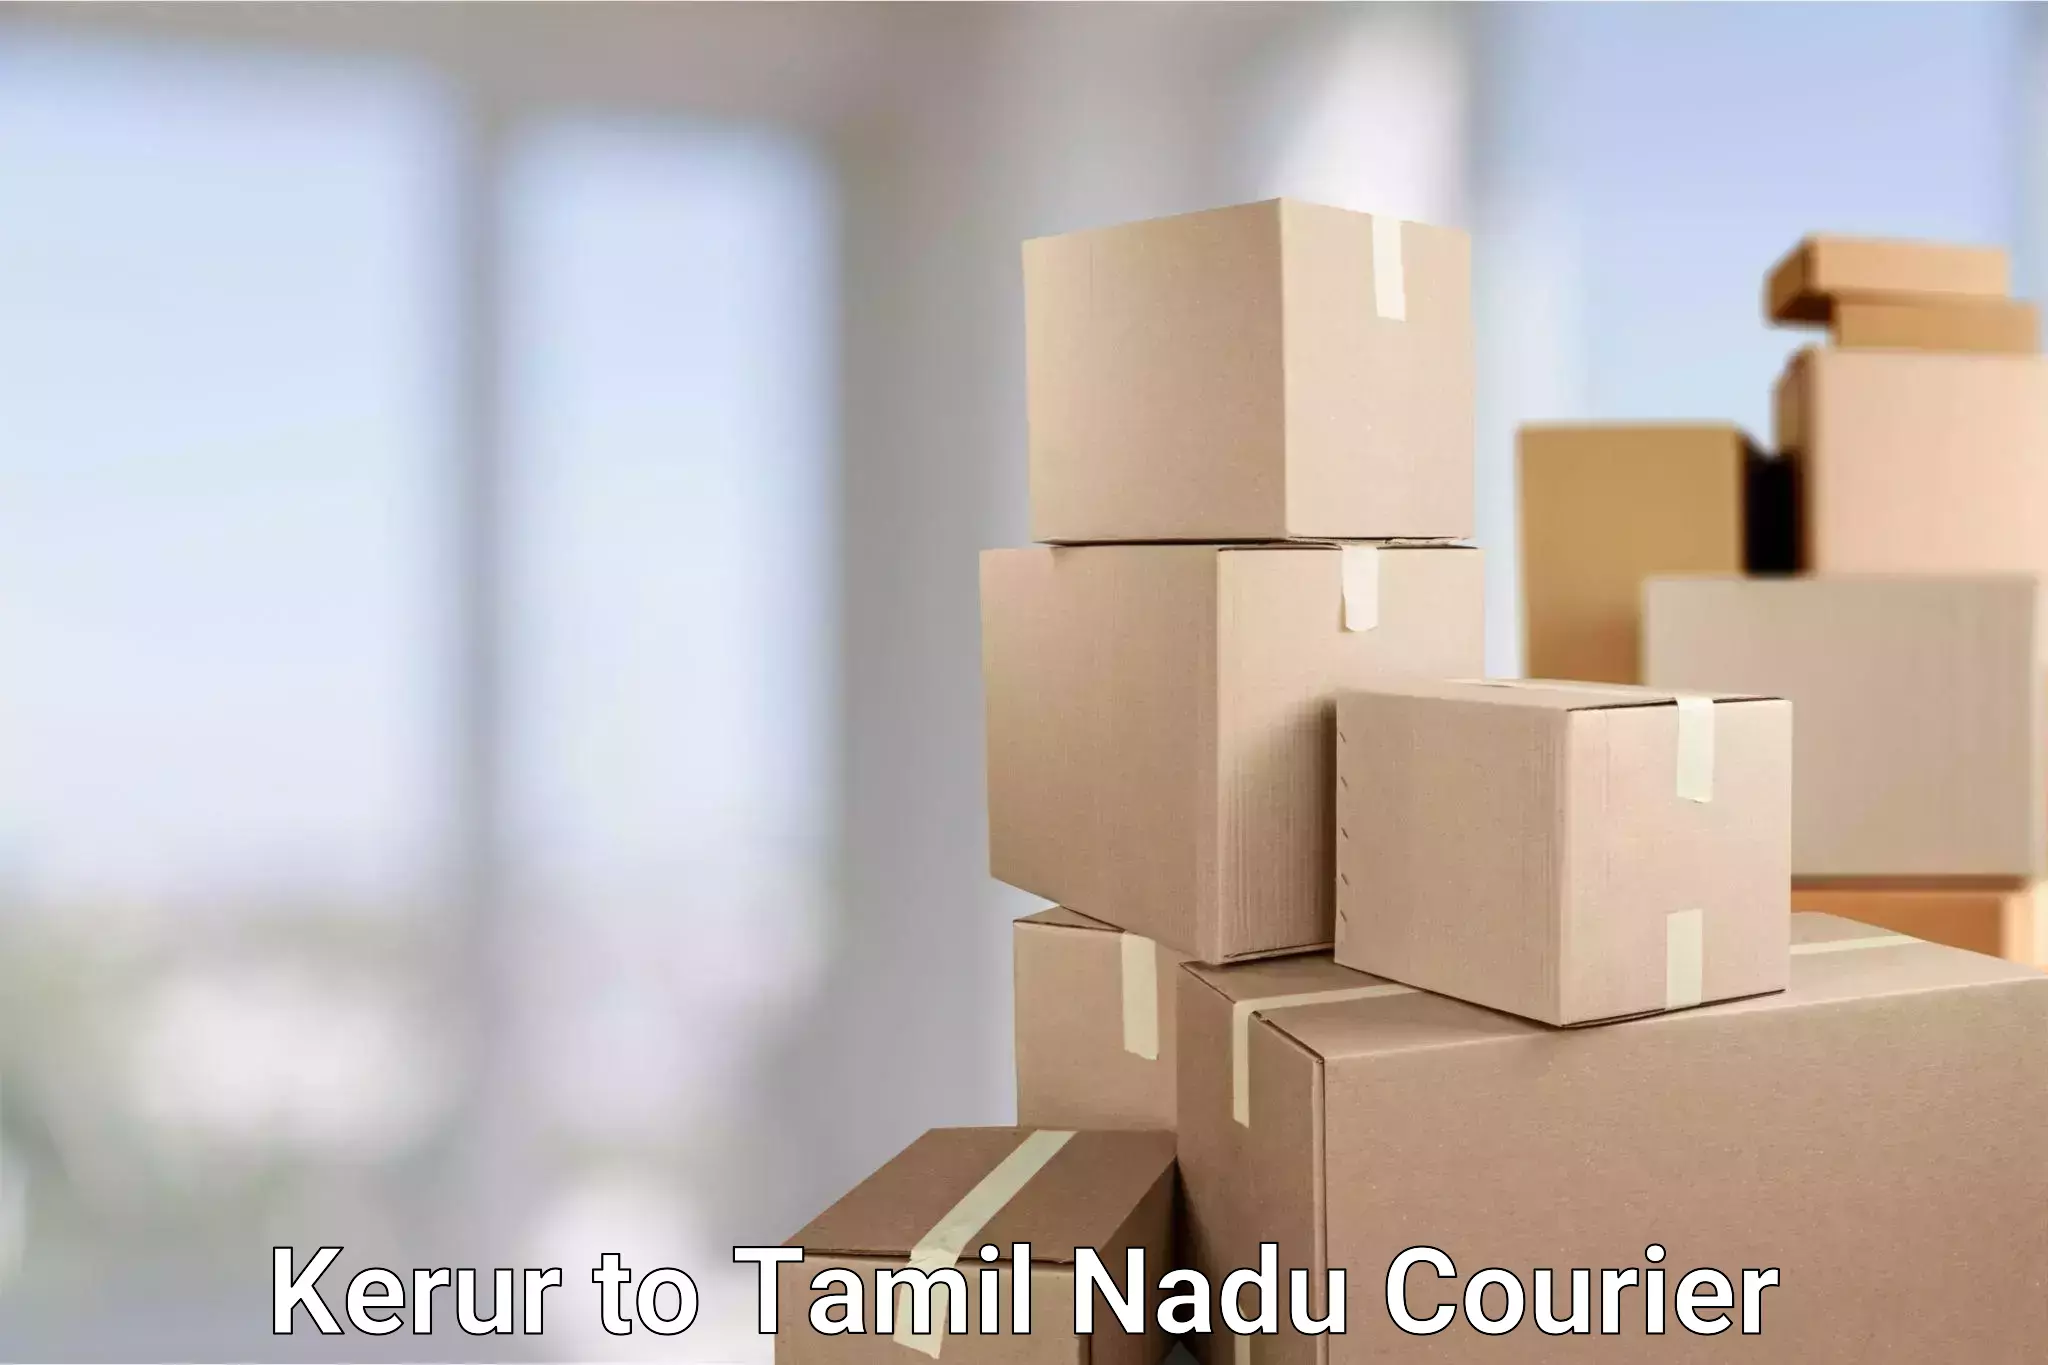 Bulk shipping discounts Kerur to Thiruvadanai